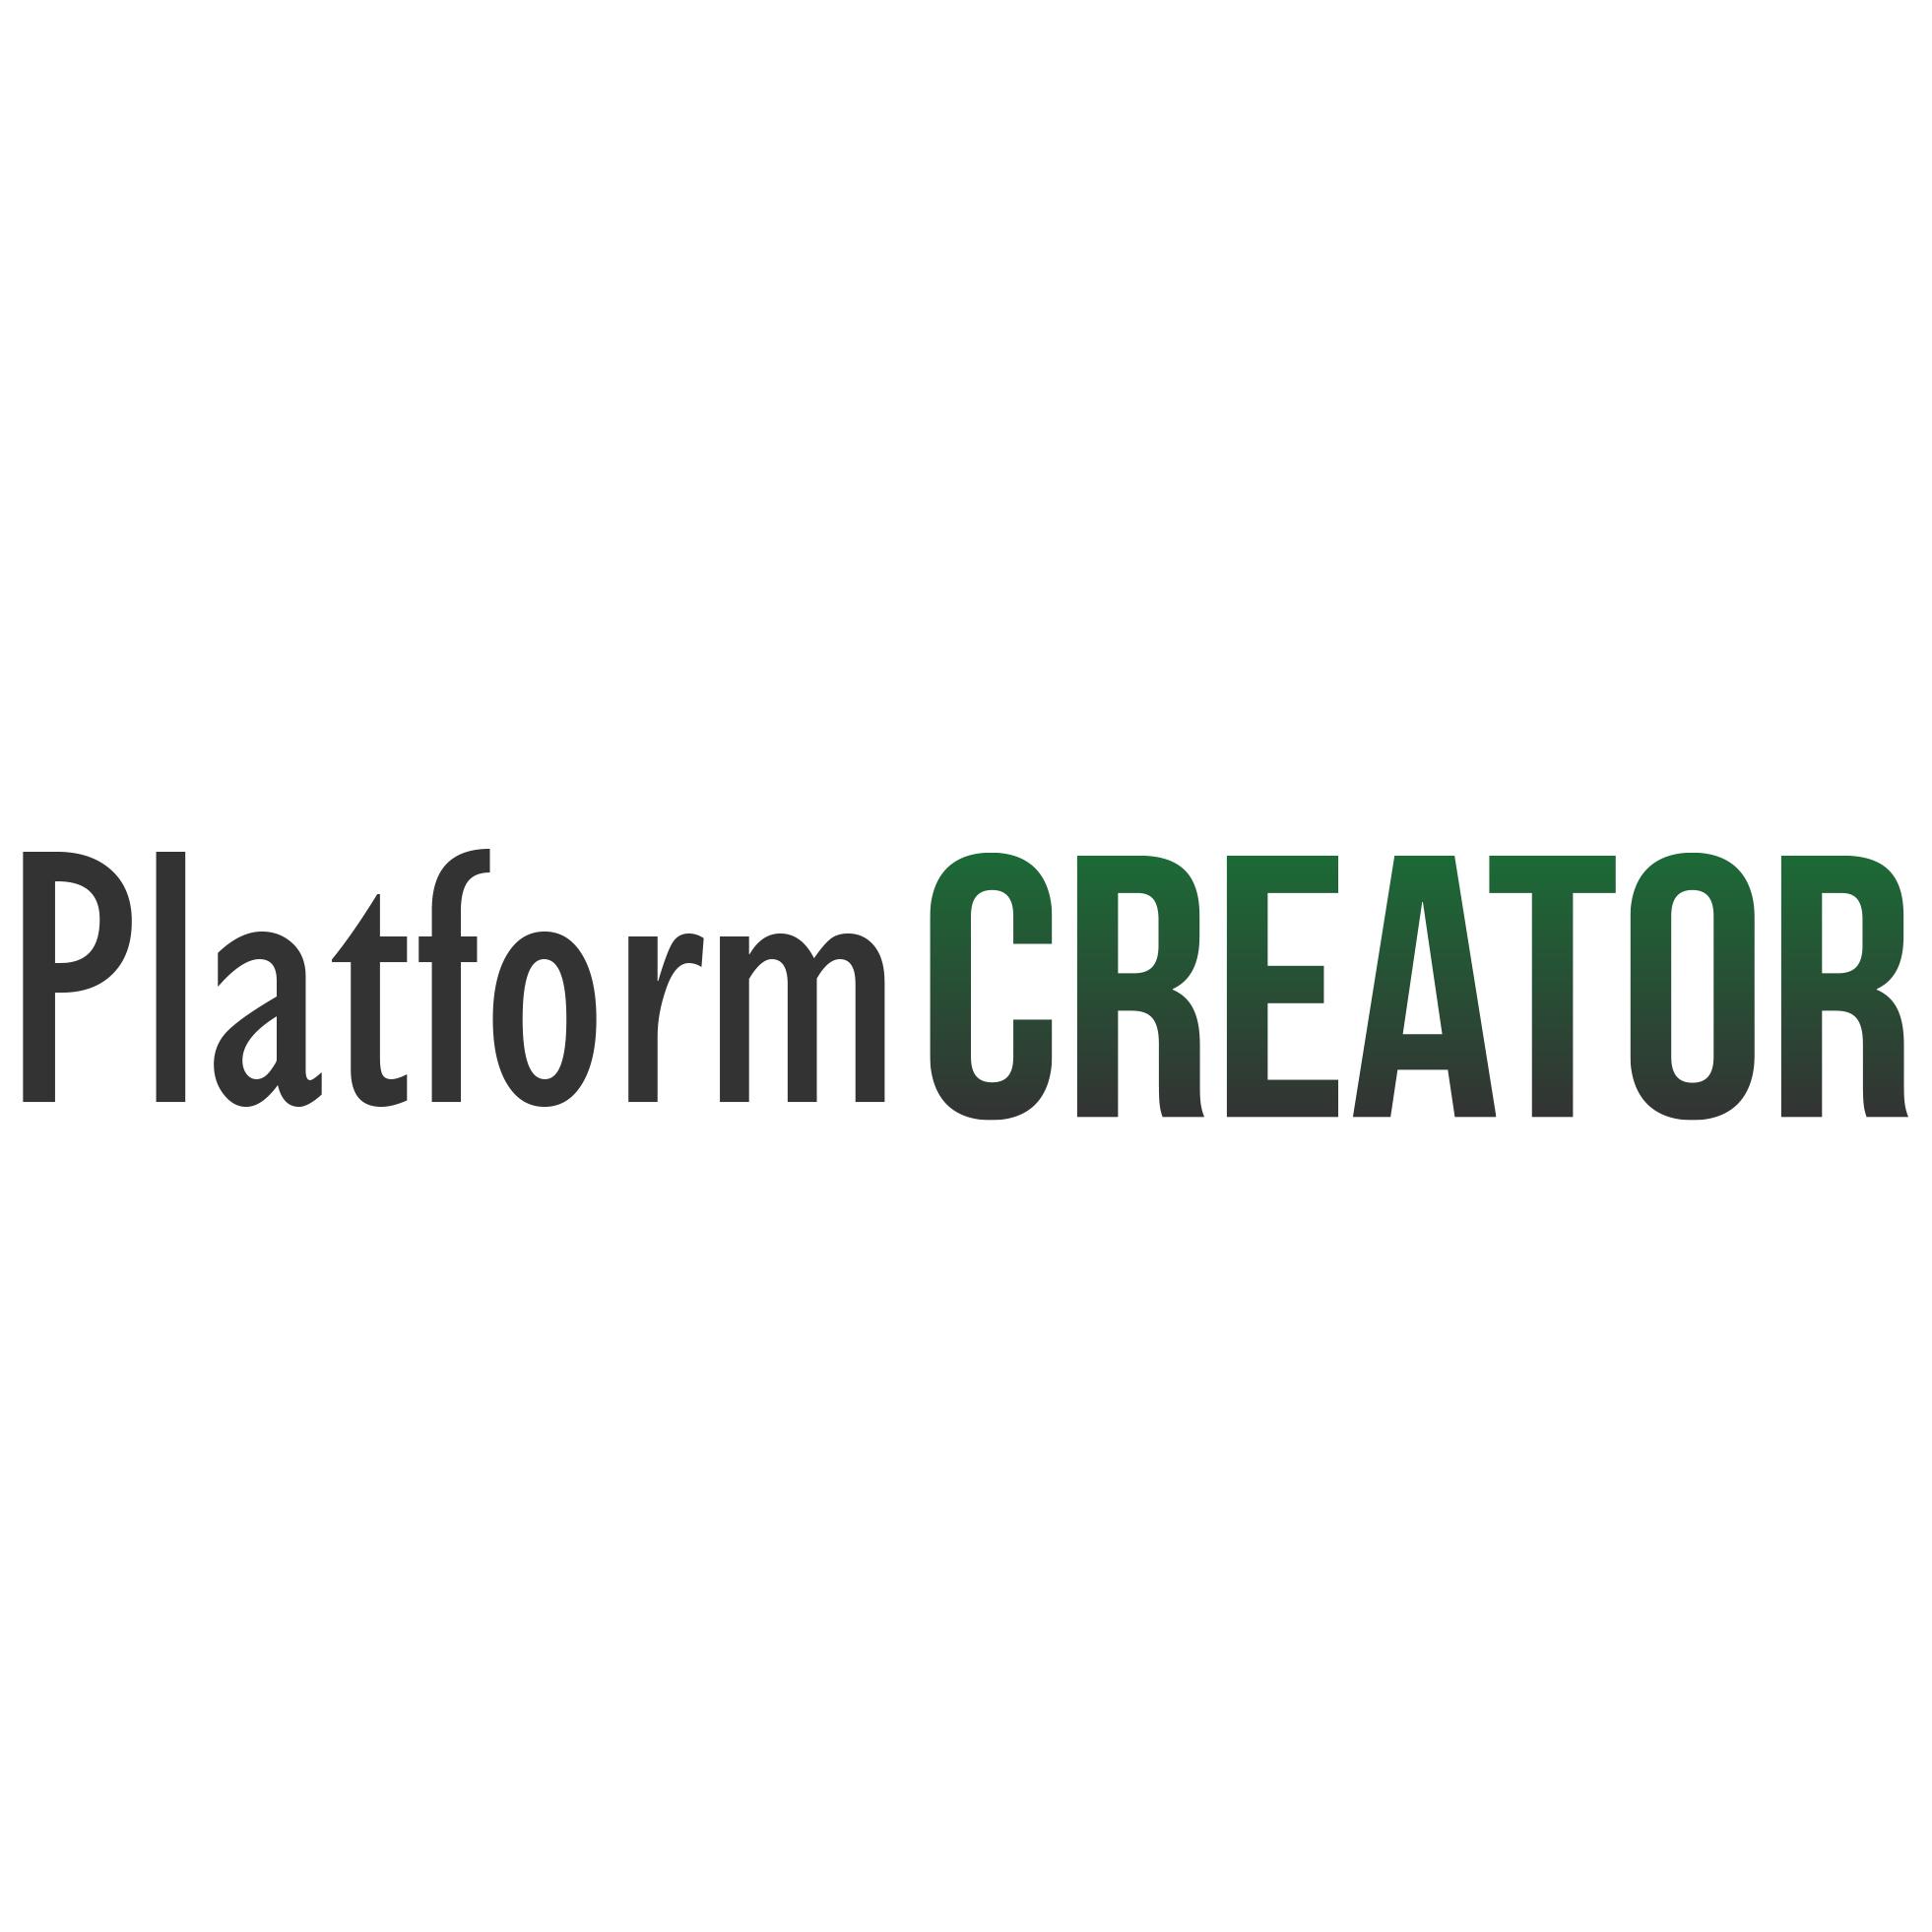 PlatformCreator profile on Qualified.One